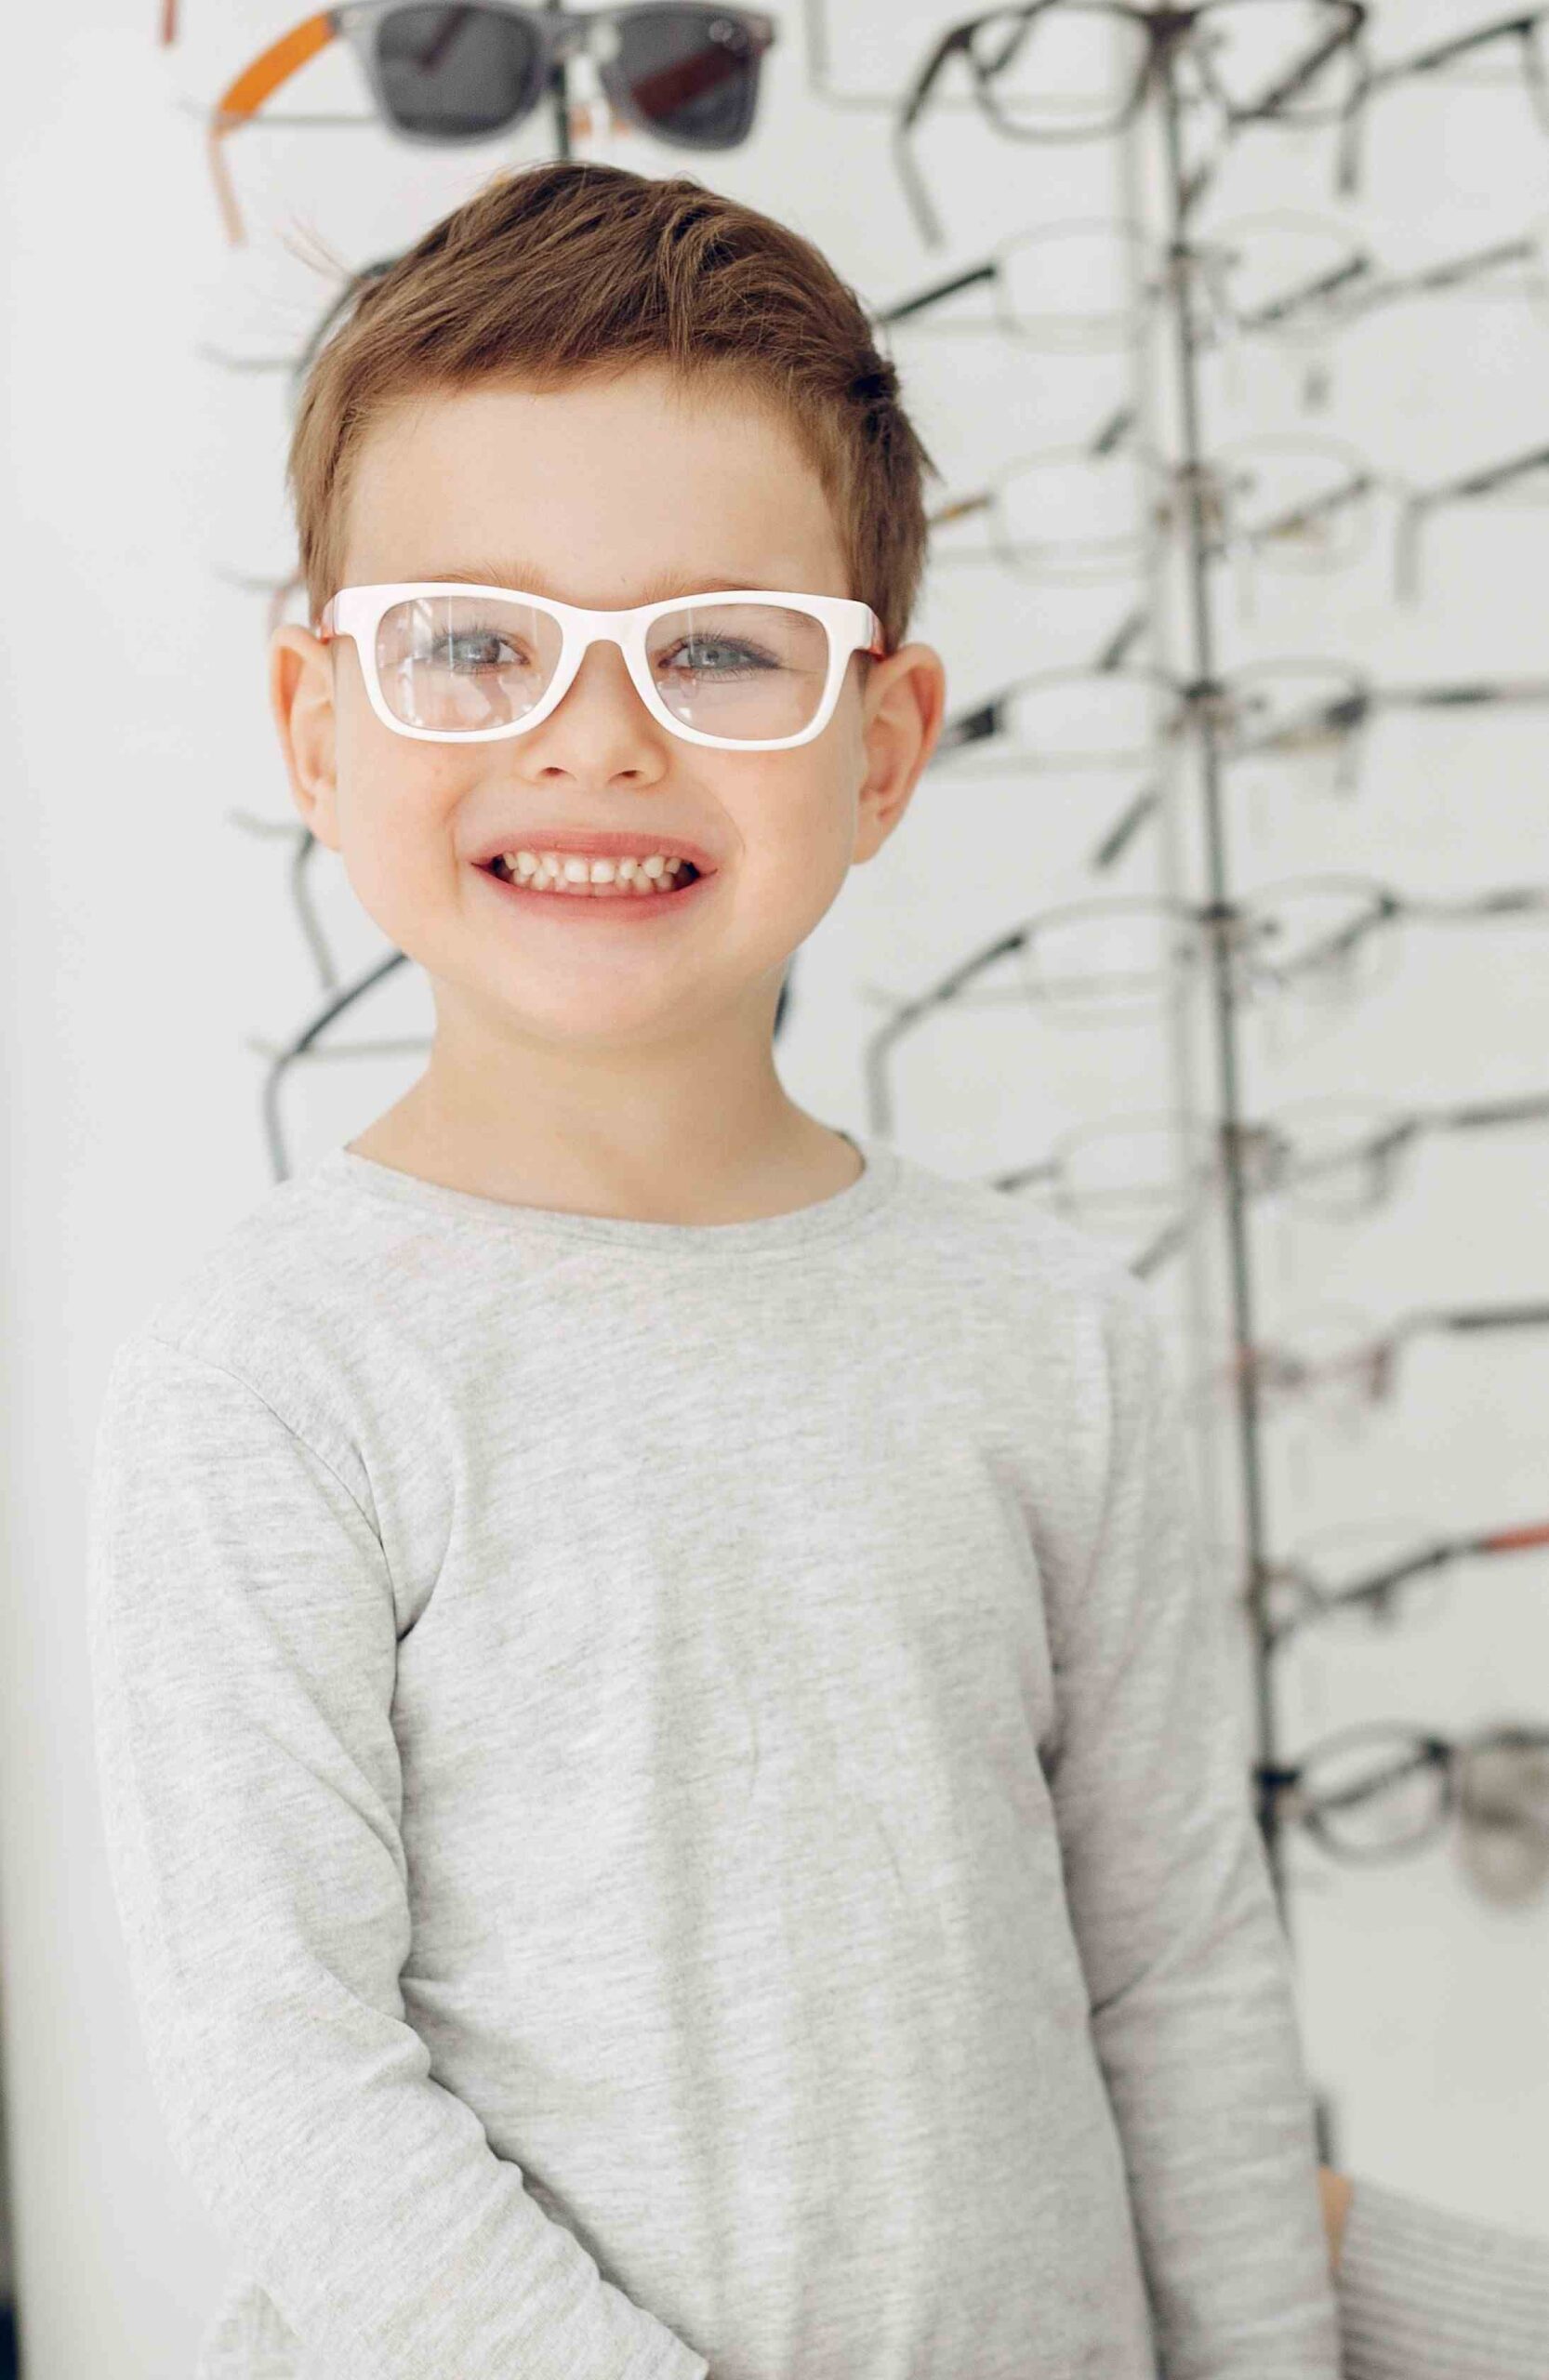 Gafas-Lentes-outfit-niño con gafas peq